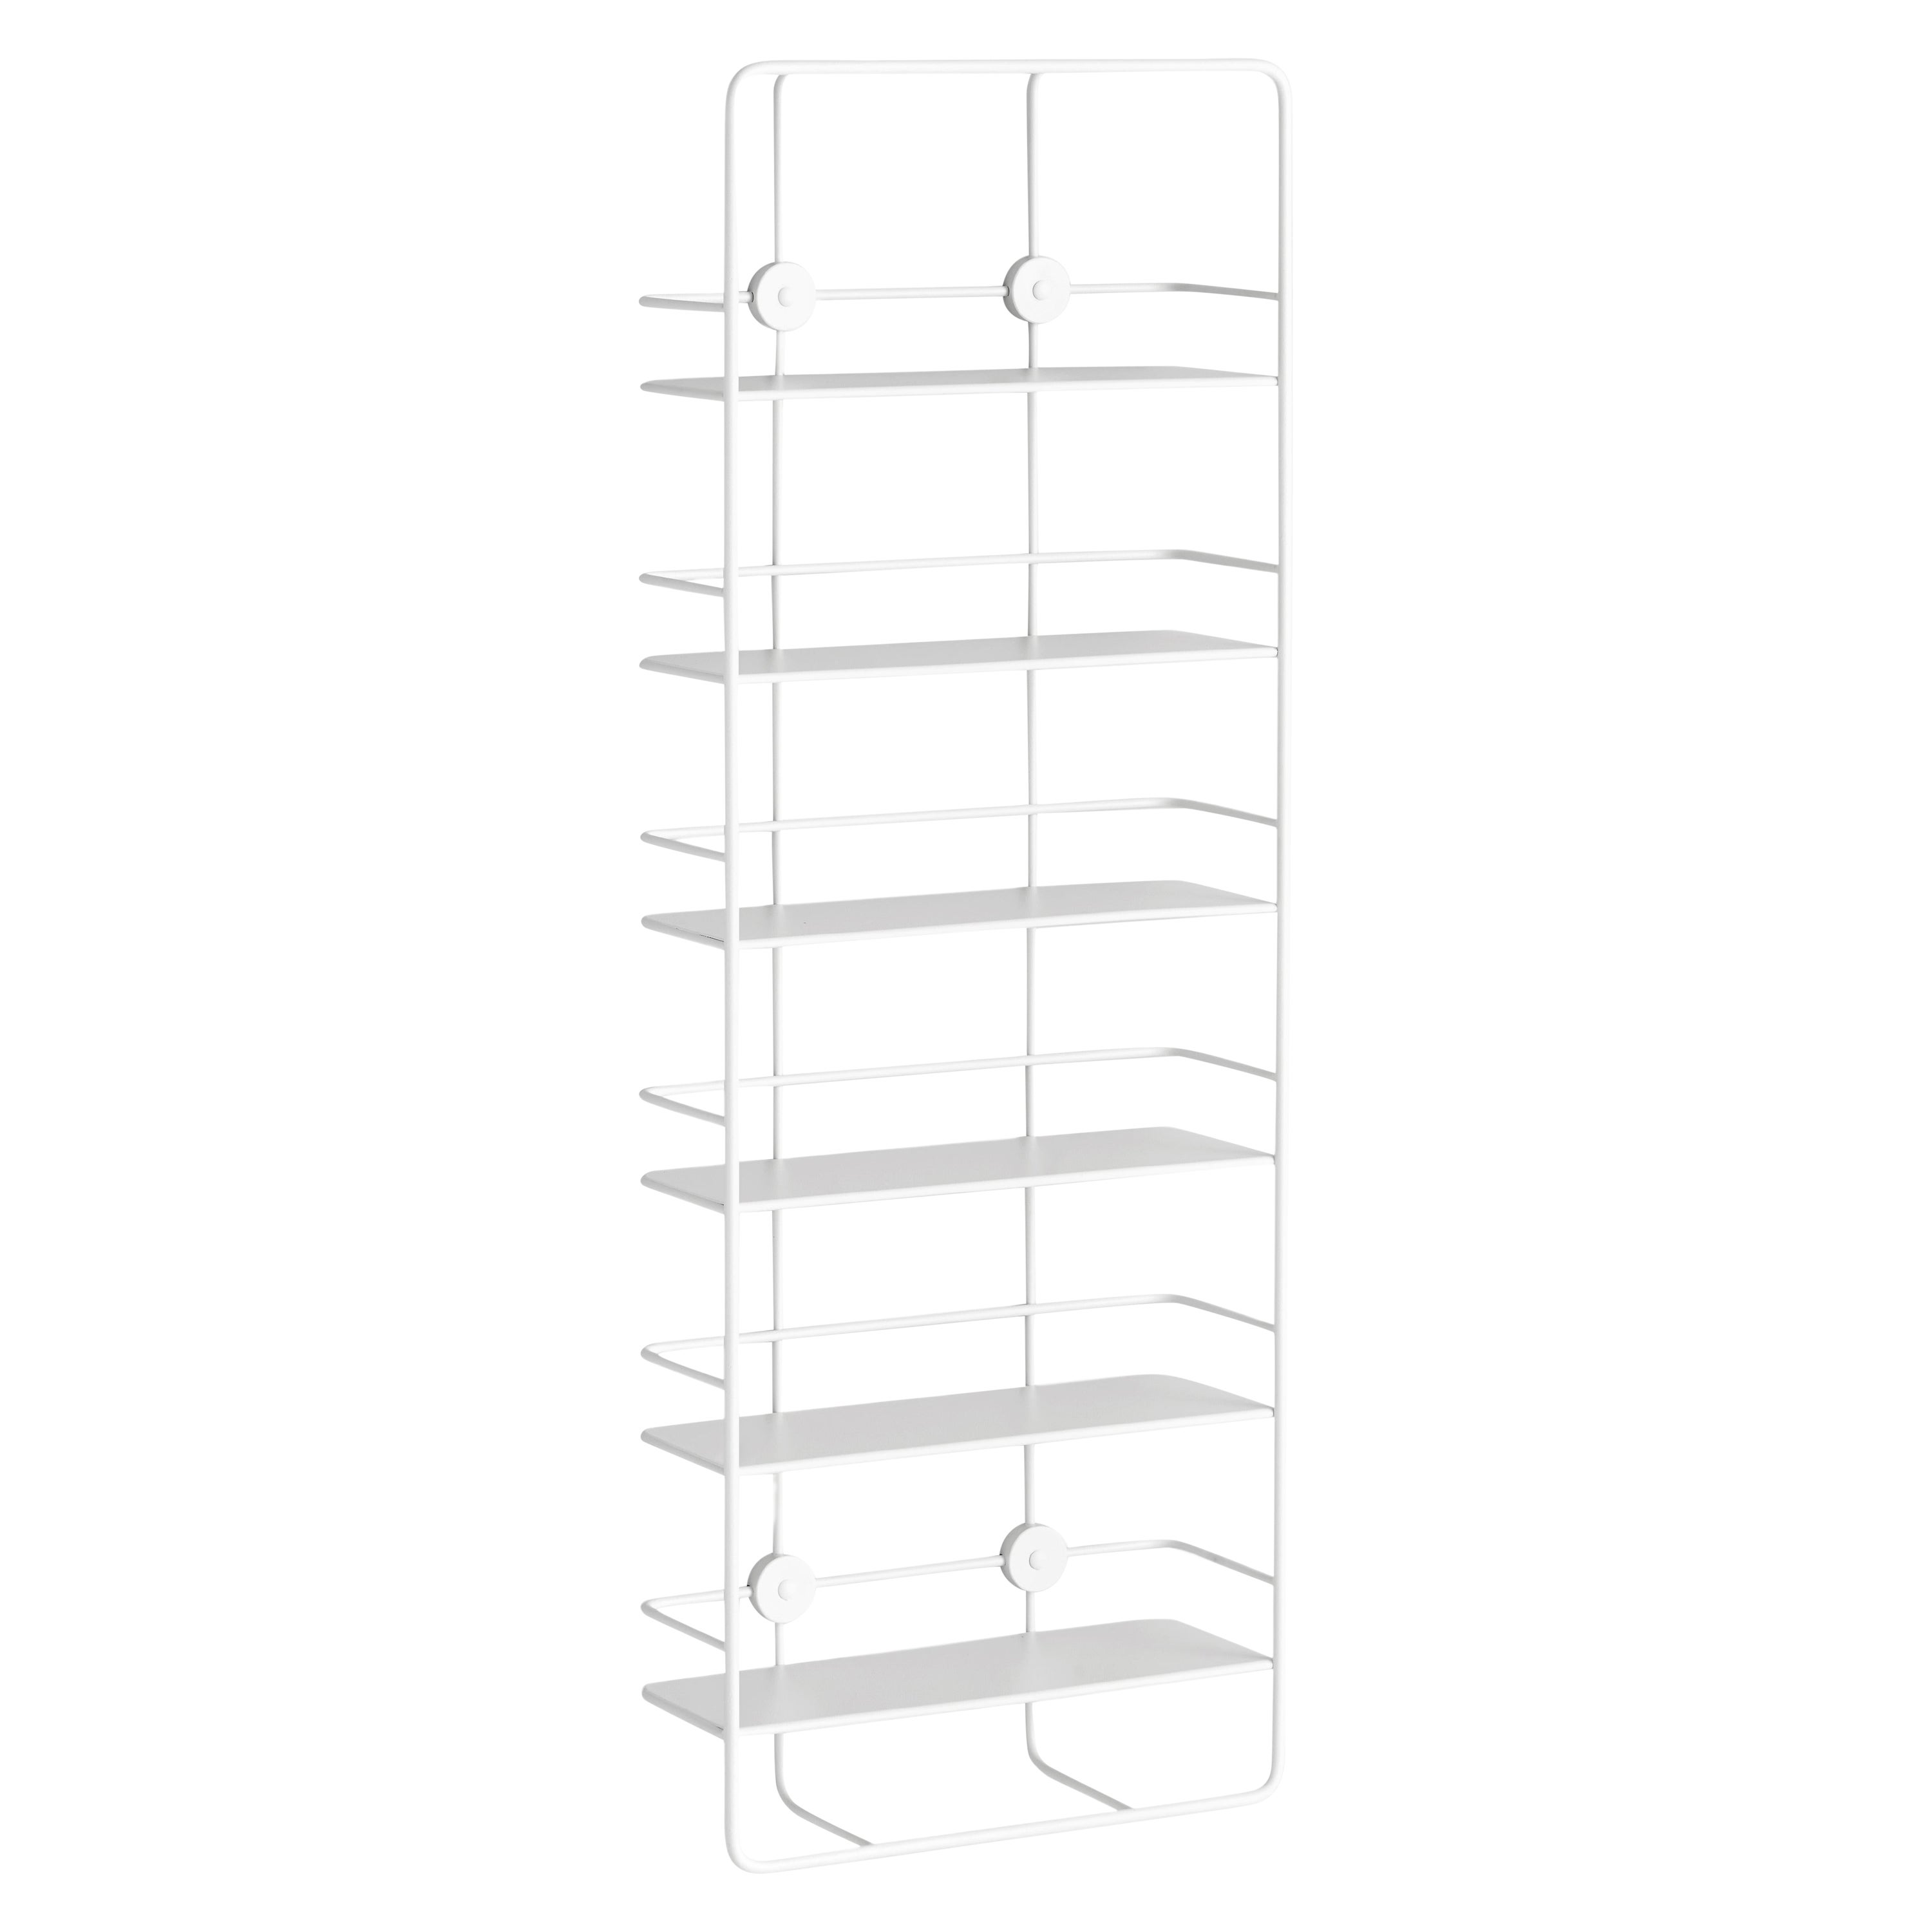 Coupé Vertical Shelf by Poiat